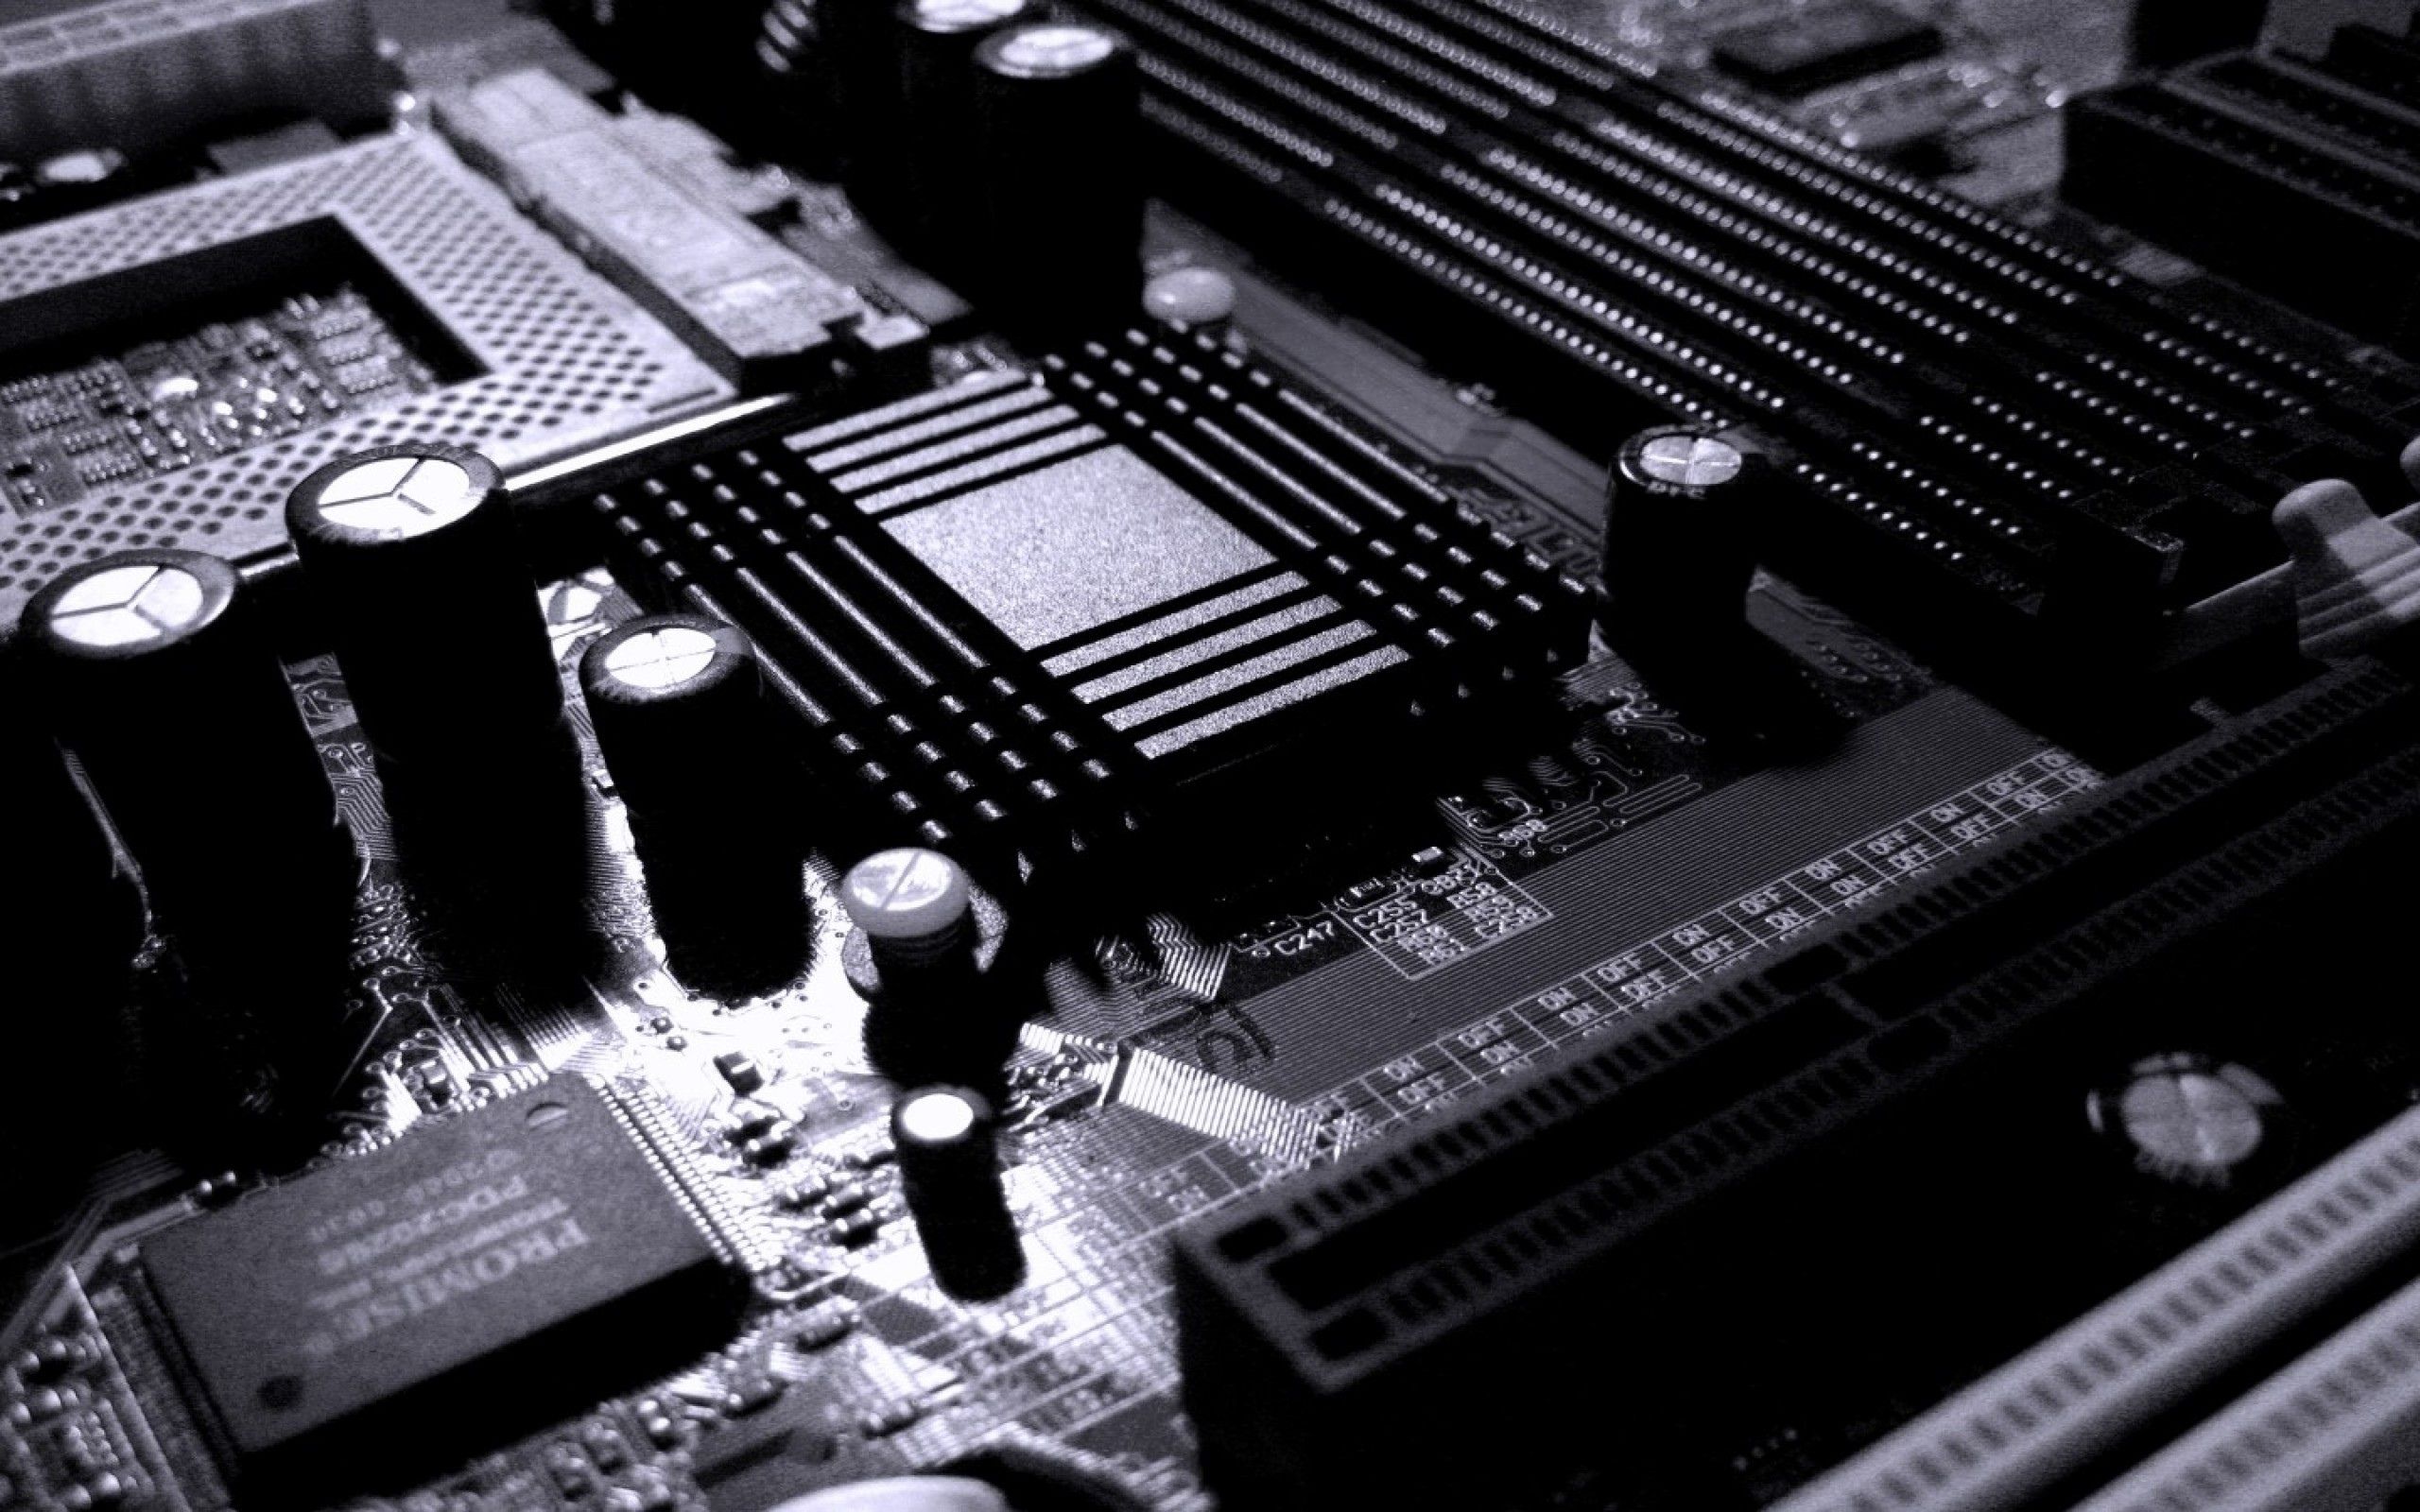 AMD Motherboard Background